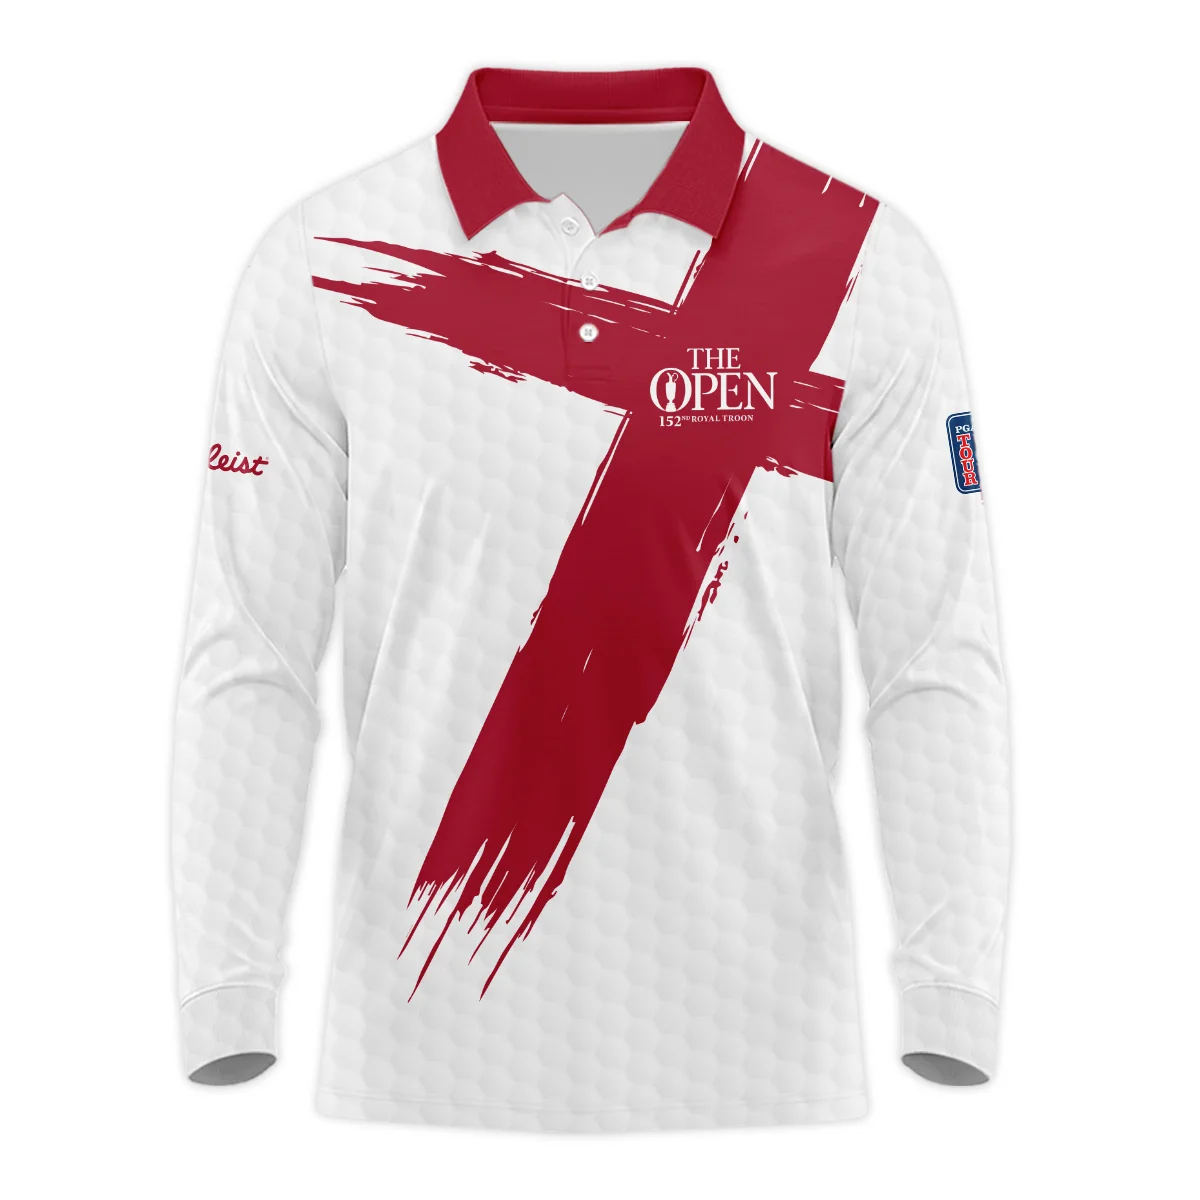 Titleist 152nd The Open Championship Golf Sport Unisex Sweatshirt Red White Golf Pattern All Over Print Sweatshirt